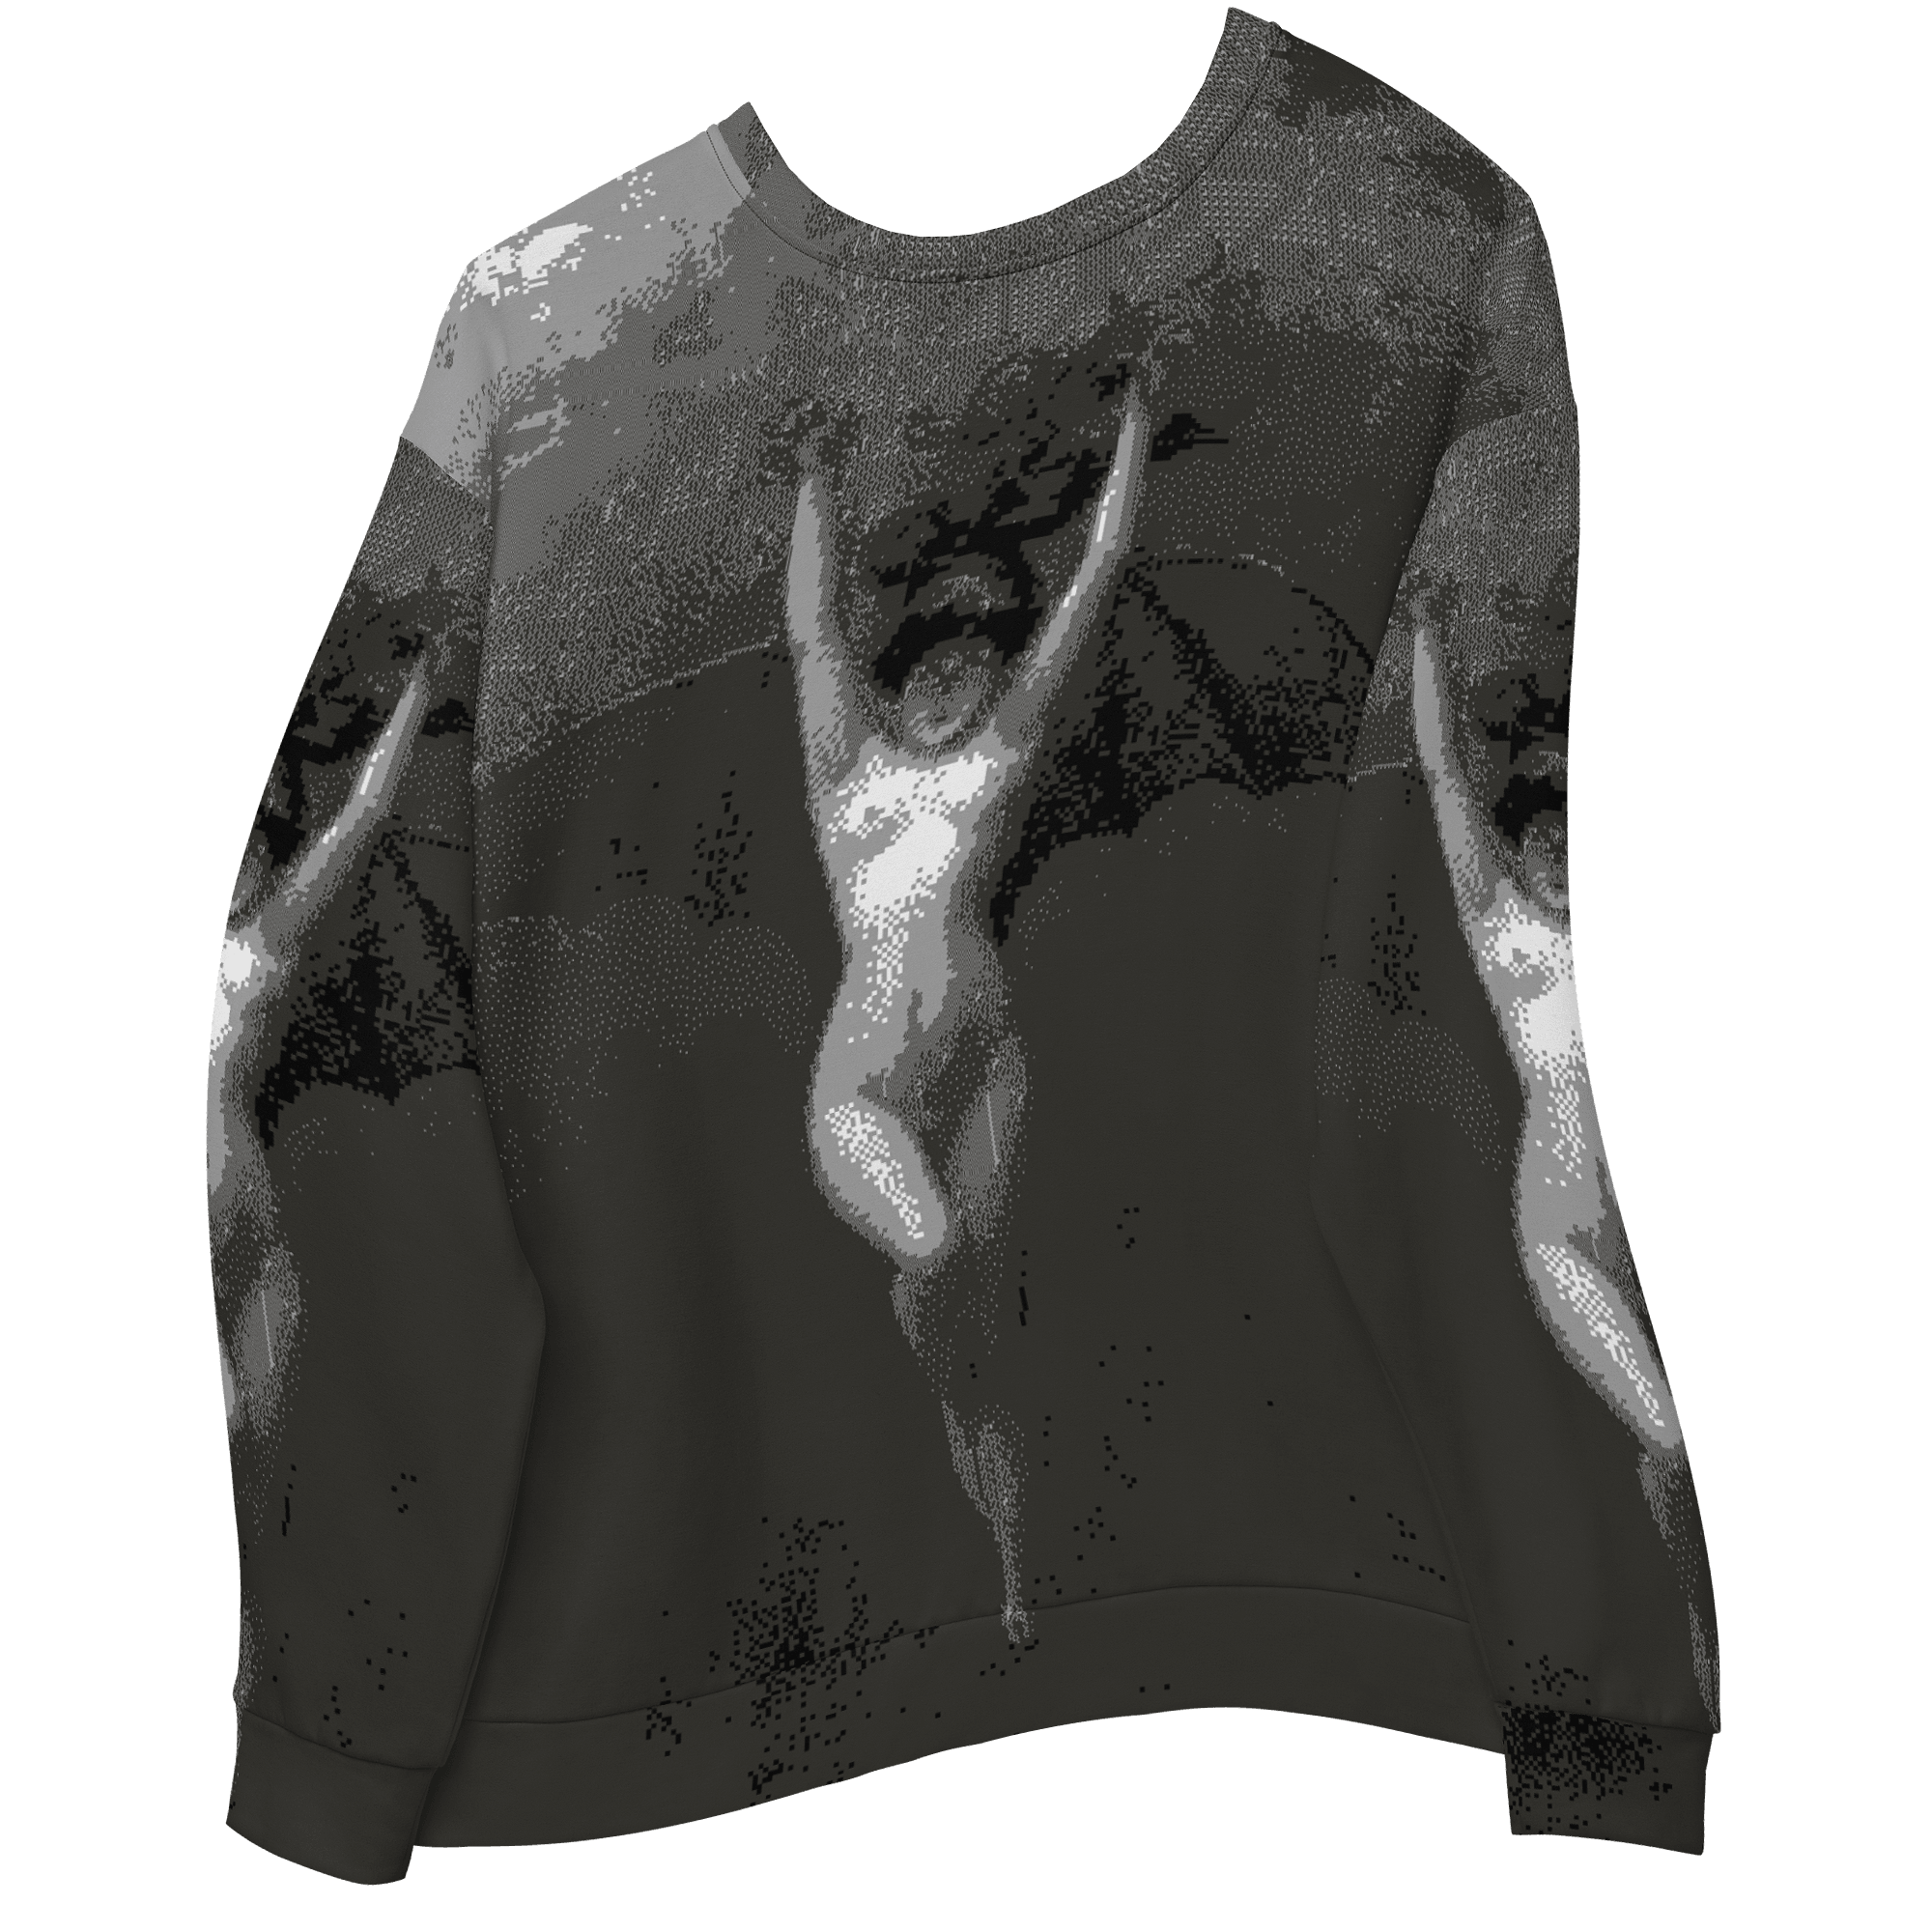 Night Girl® Unisex Sweatshirt (8 pieces for sale) - Kikillo Club